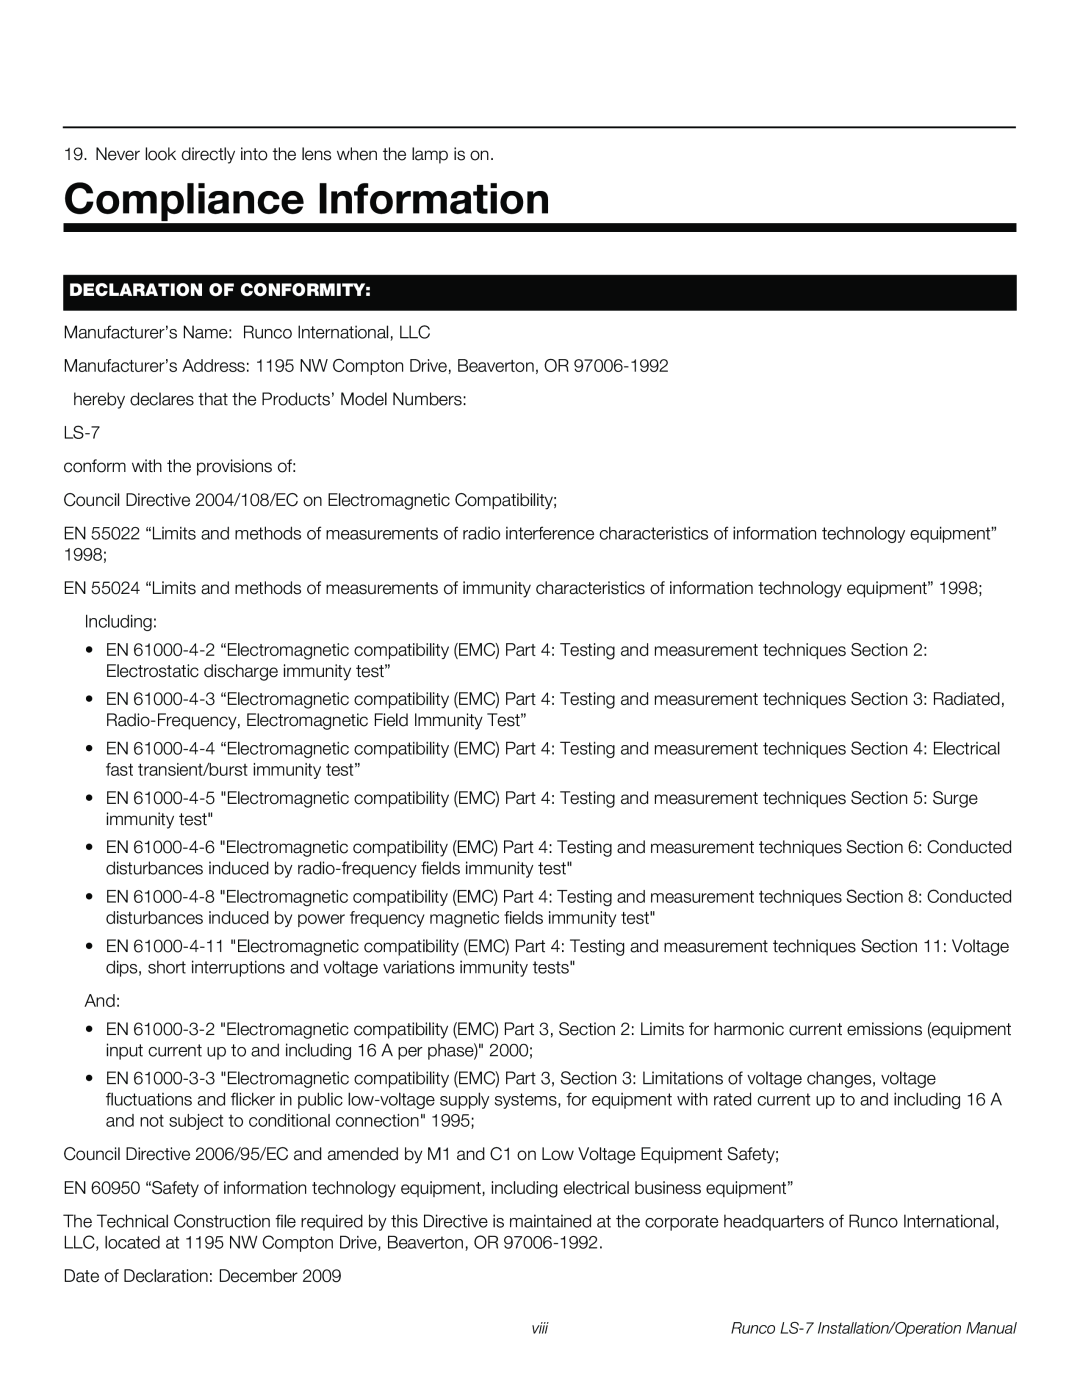 Runco LS-7 operation manual Compliance Information, Declaration Of Conformity 